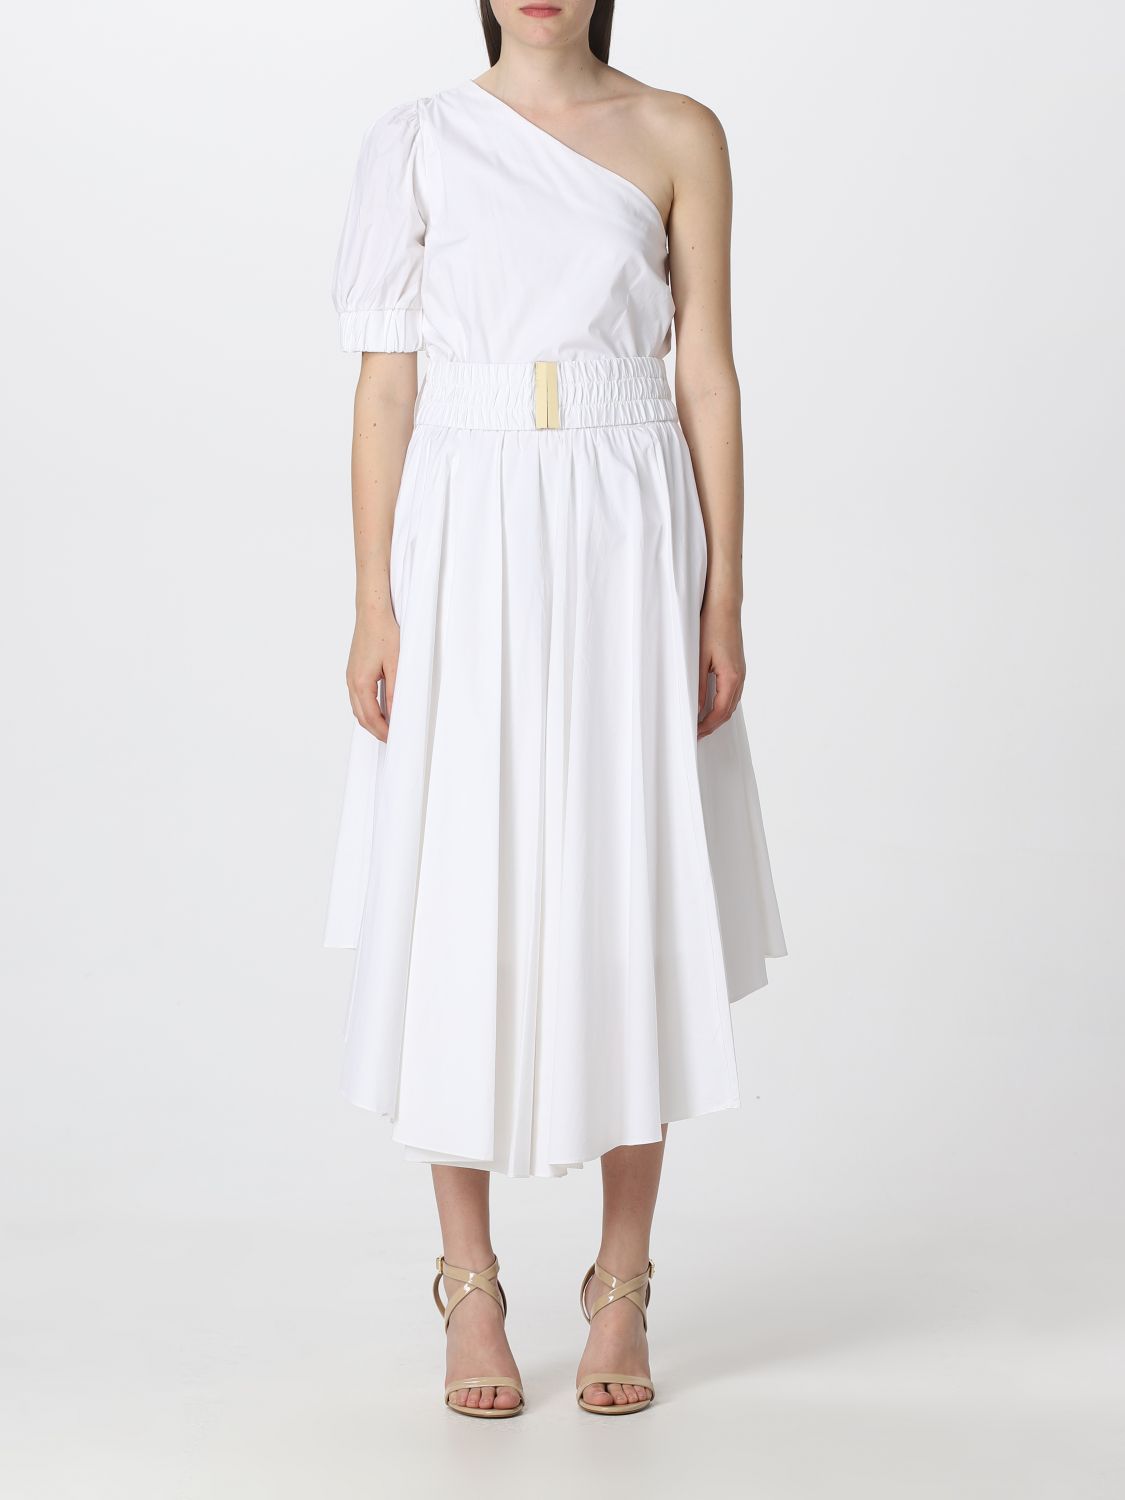 MICHAEL KORS: dress for woman - White | Michael Kors dress MS1800NF4C ...